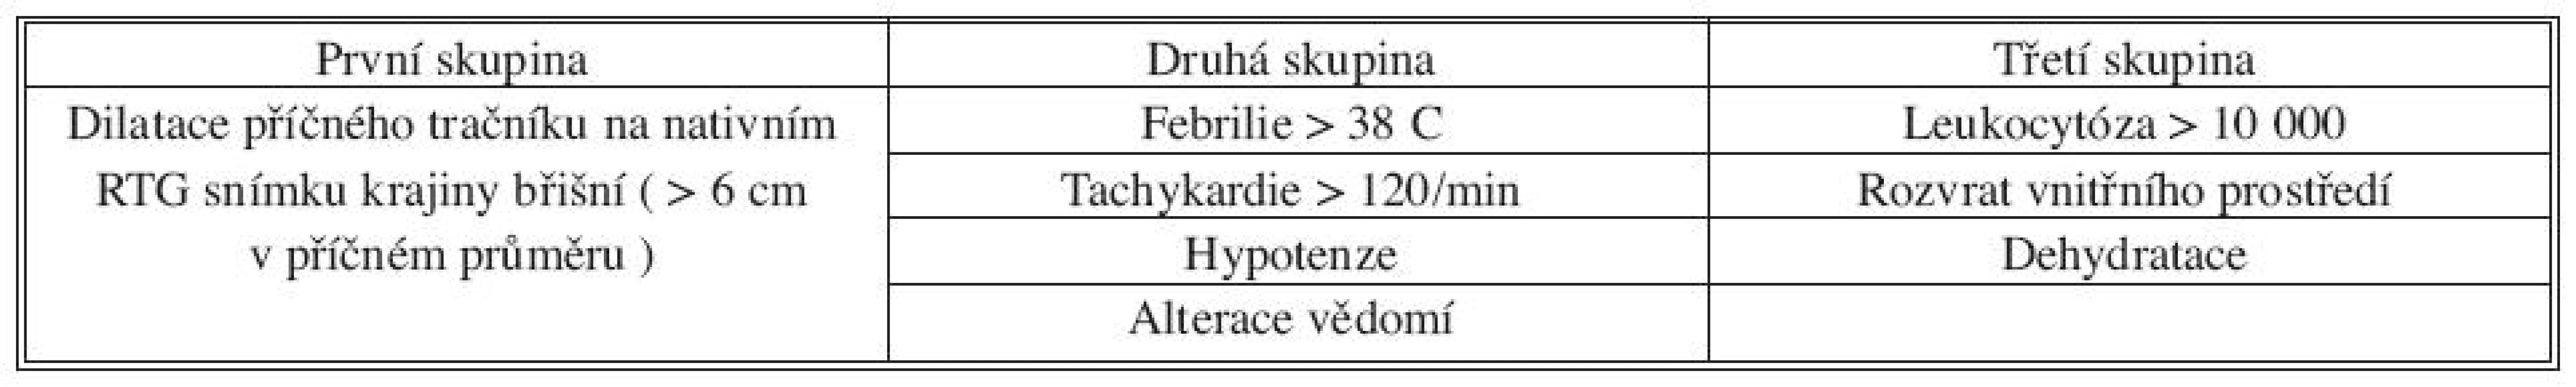 Diagnostická kritéria toxického megakolon podle Jalana
Tab. 3. Diagnostic criteria of toxic megacolon according to Jalan